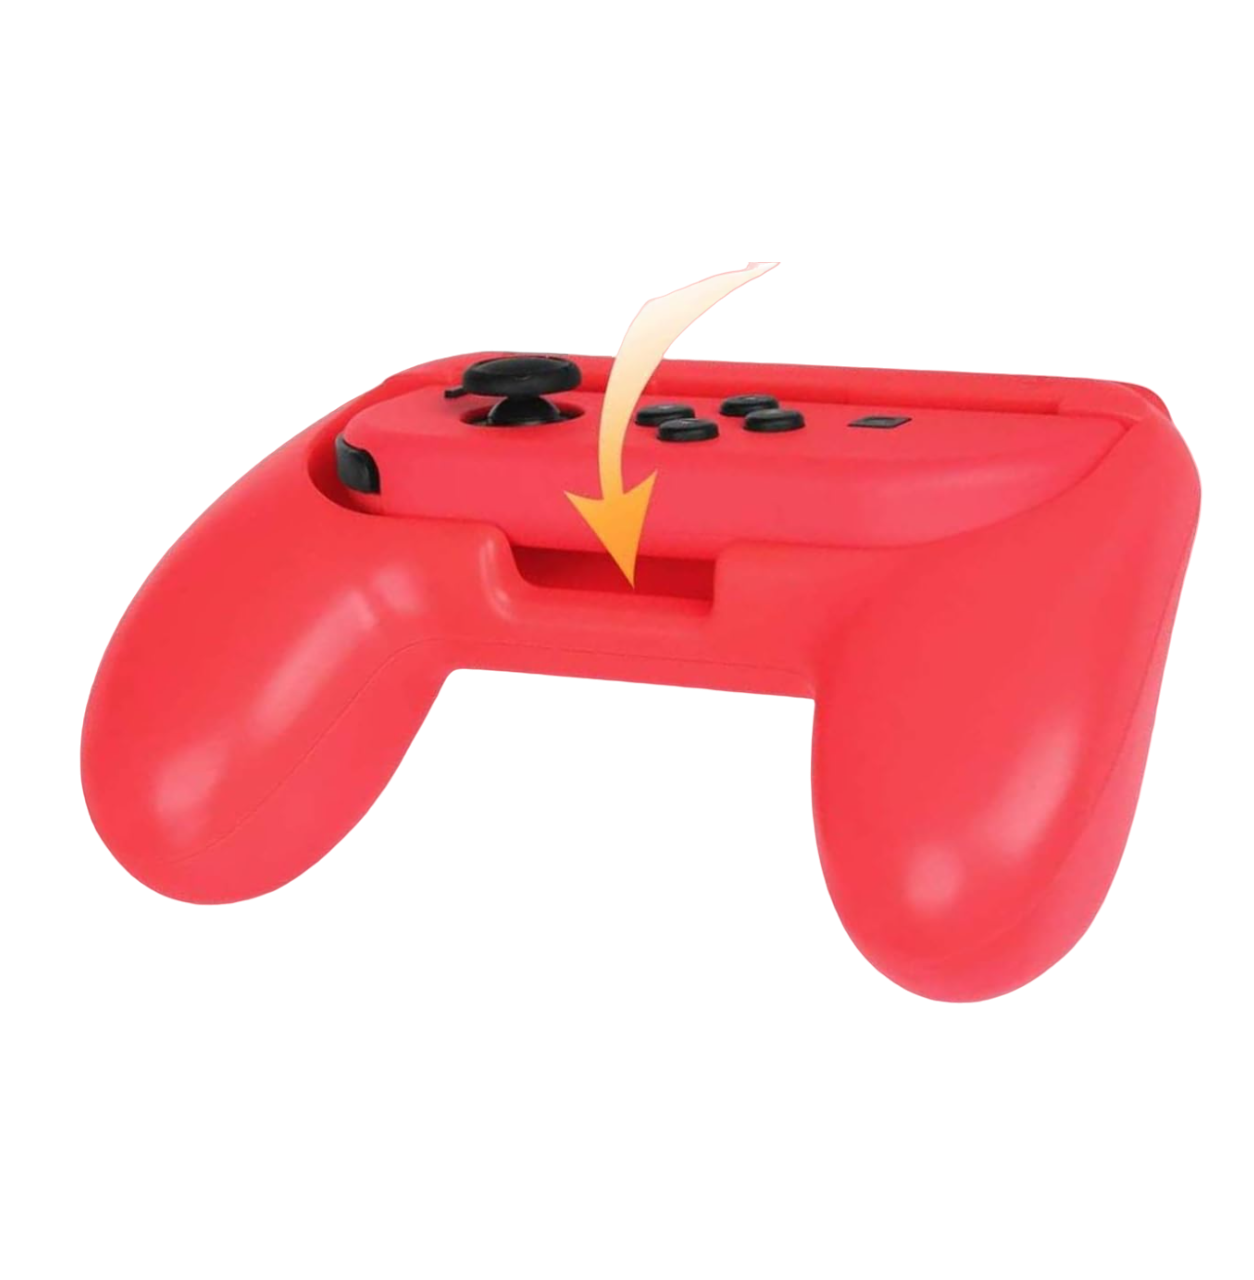 Grips Porta Joy-cons Fundas Para Controles Nintendo Switch - Azul/Rojo